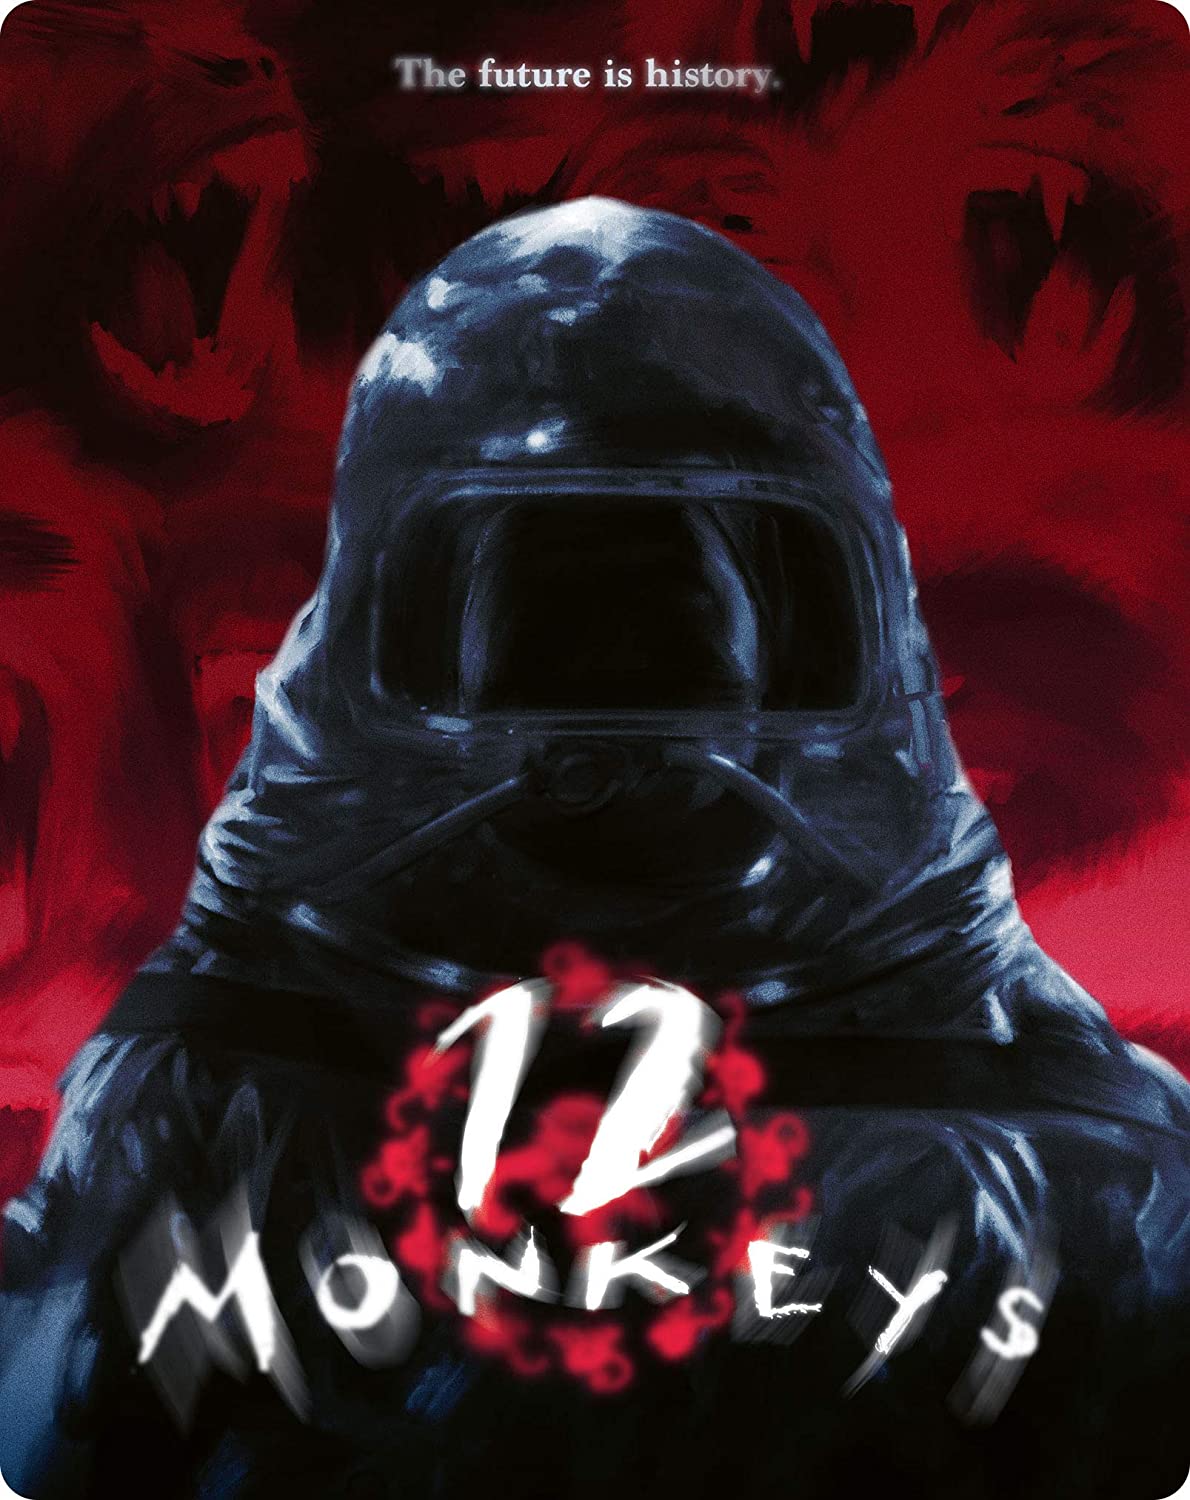 12 Monkeys- Arrow Video Blu-ray Review